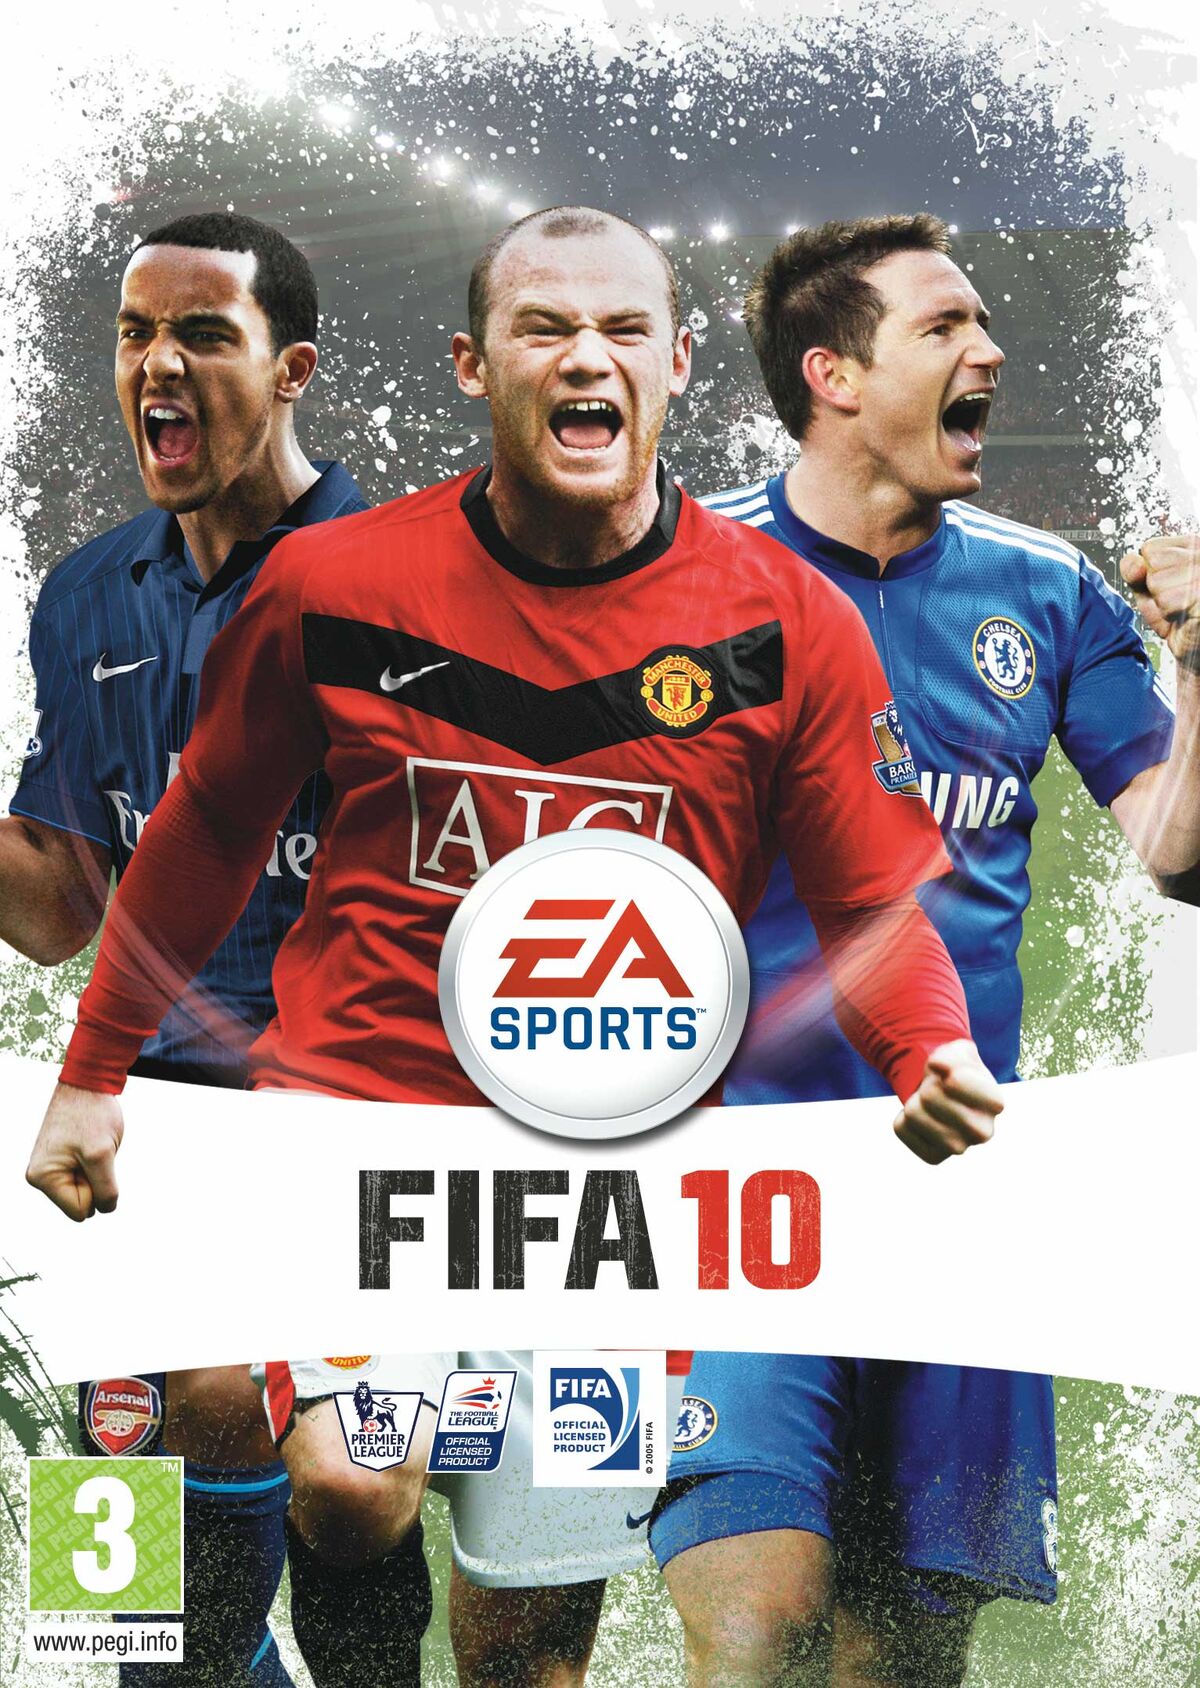 FIFA 08 - Wikipedia